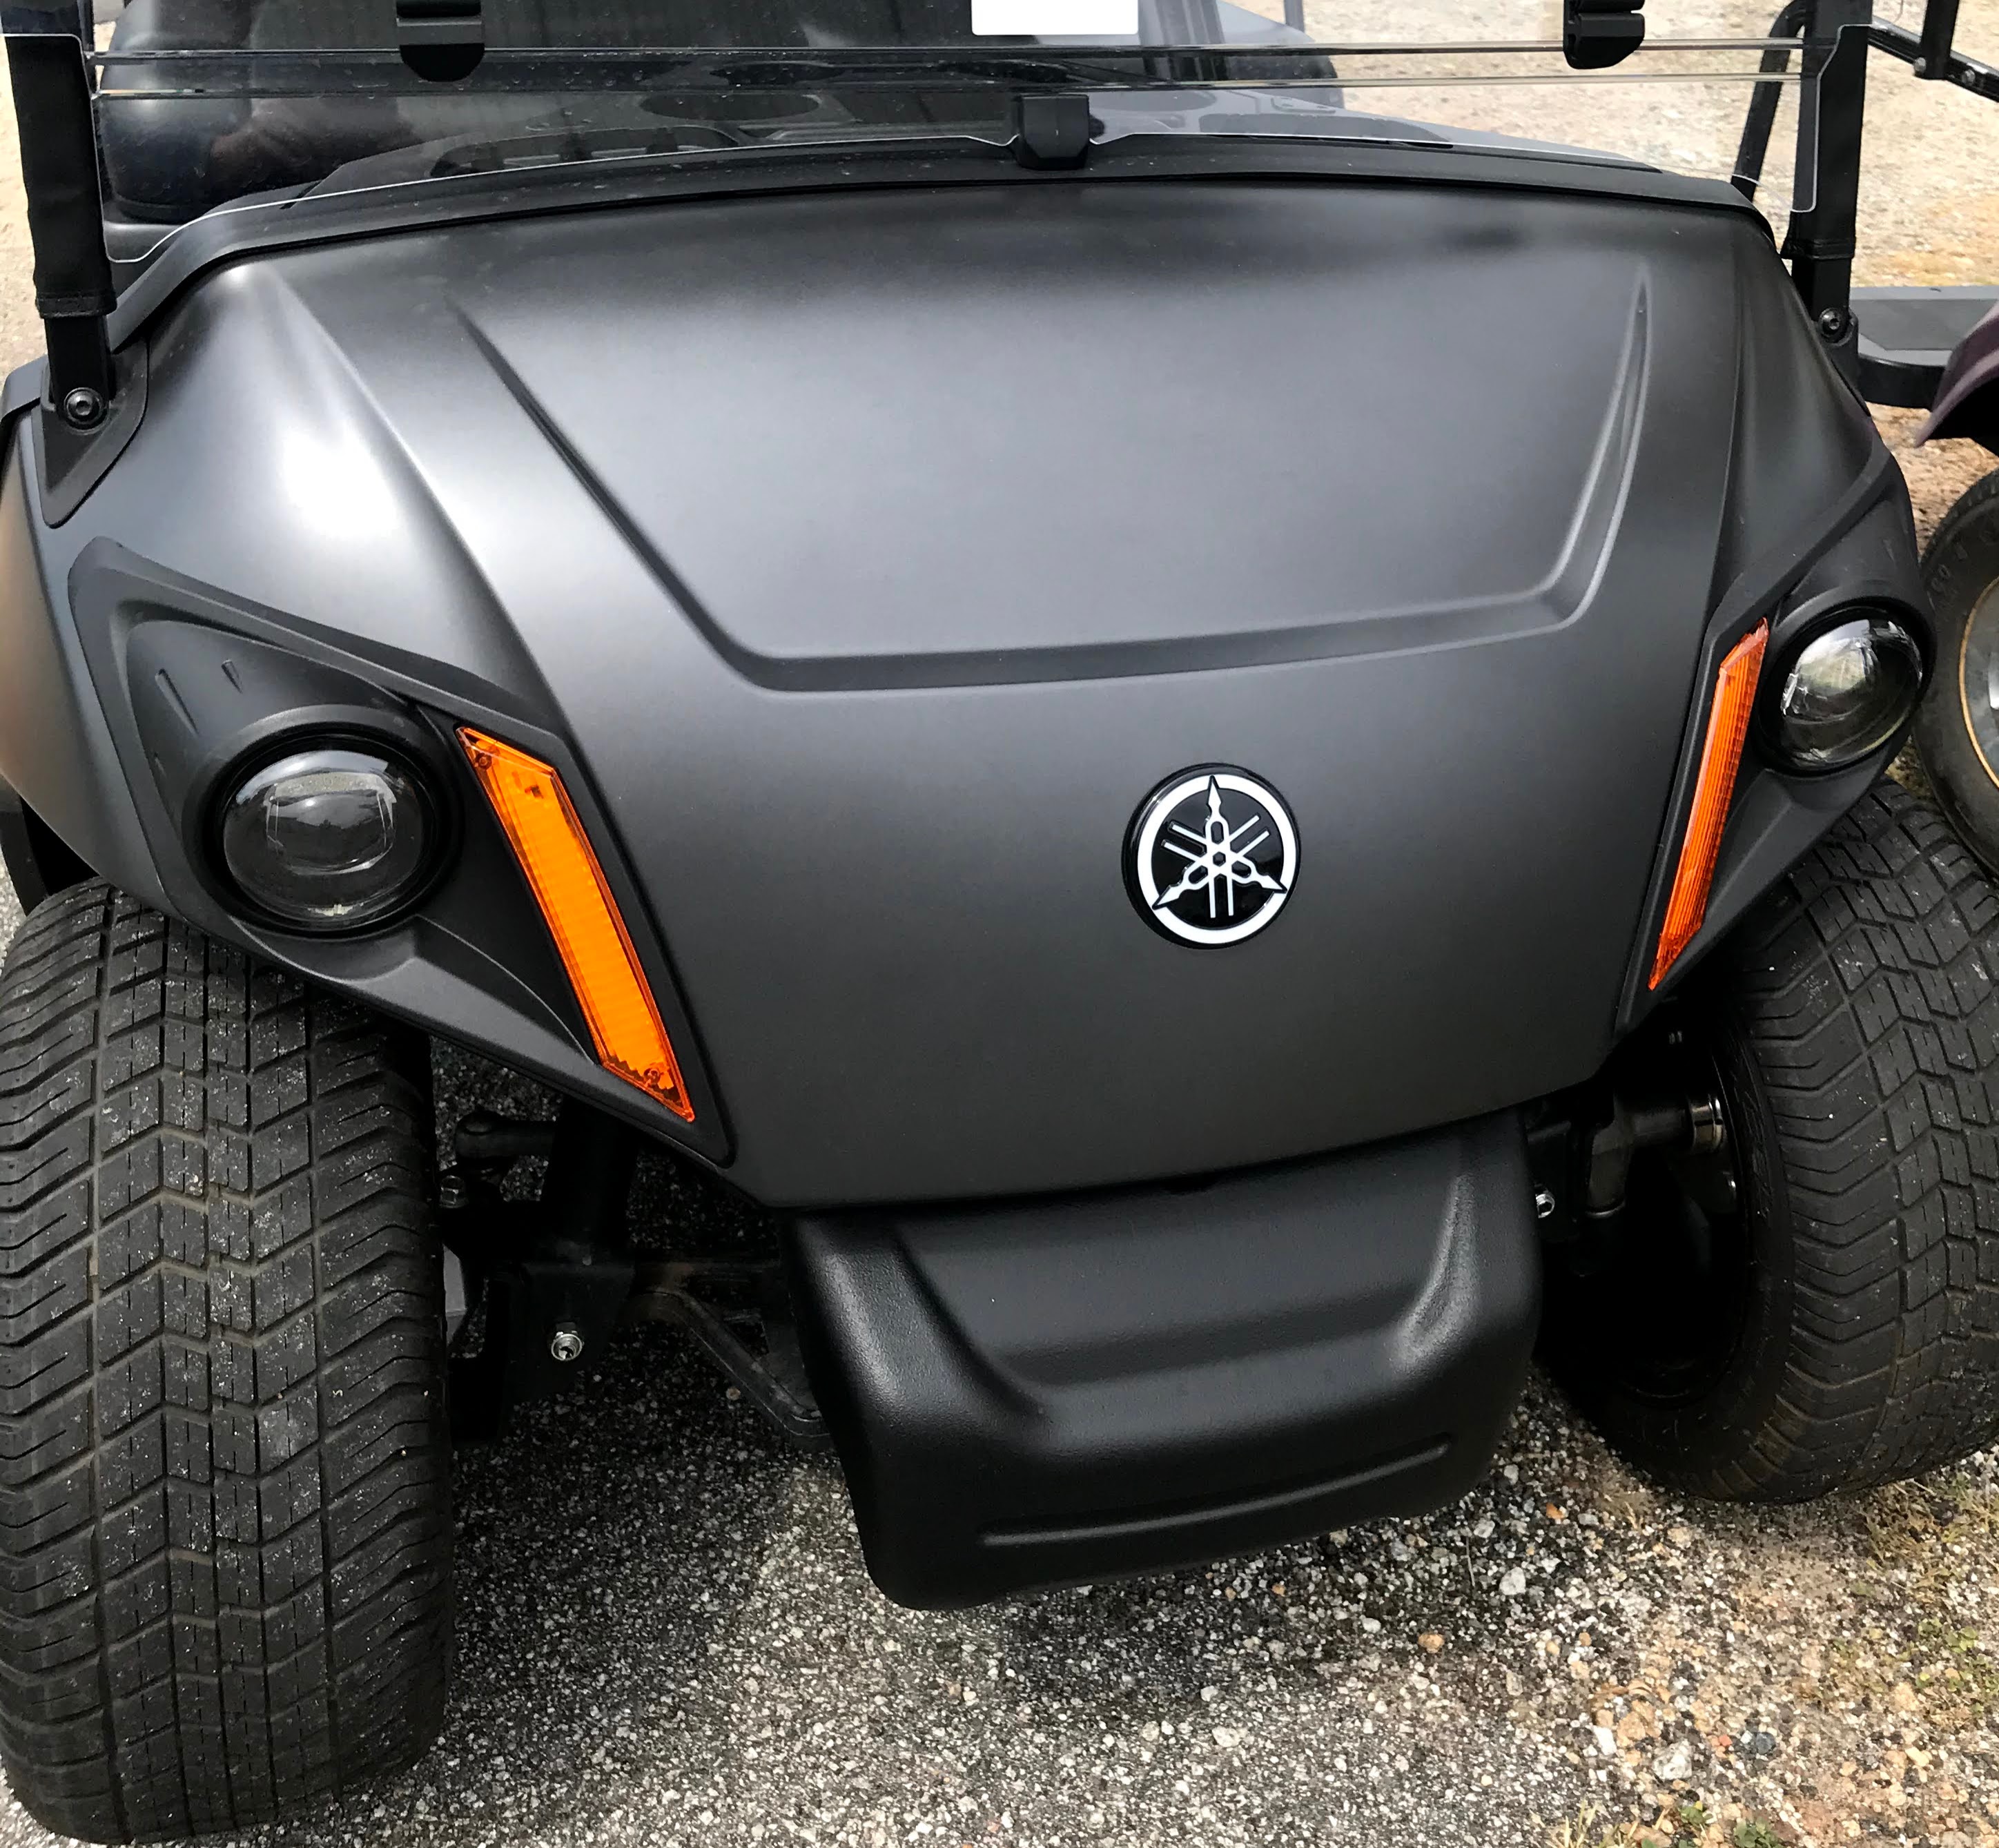 Matt dark grey Yamaha golf cart